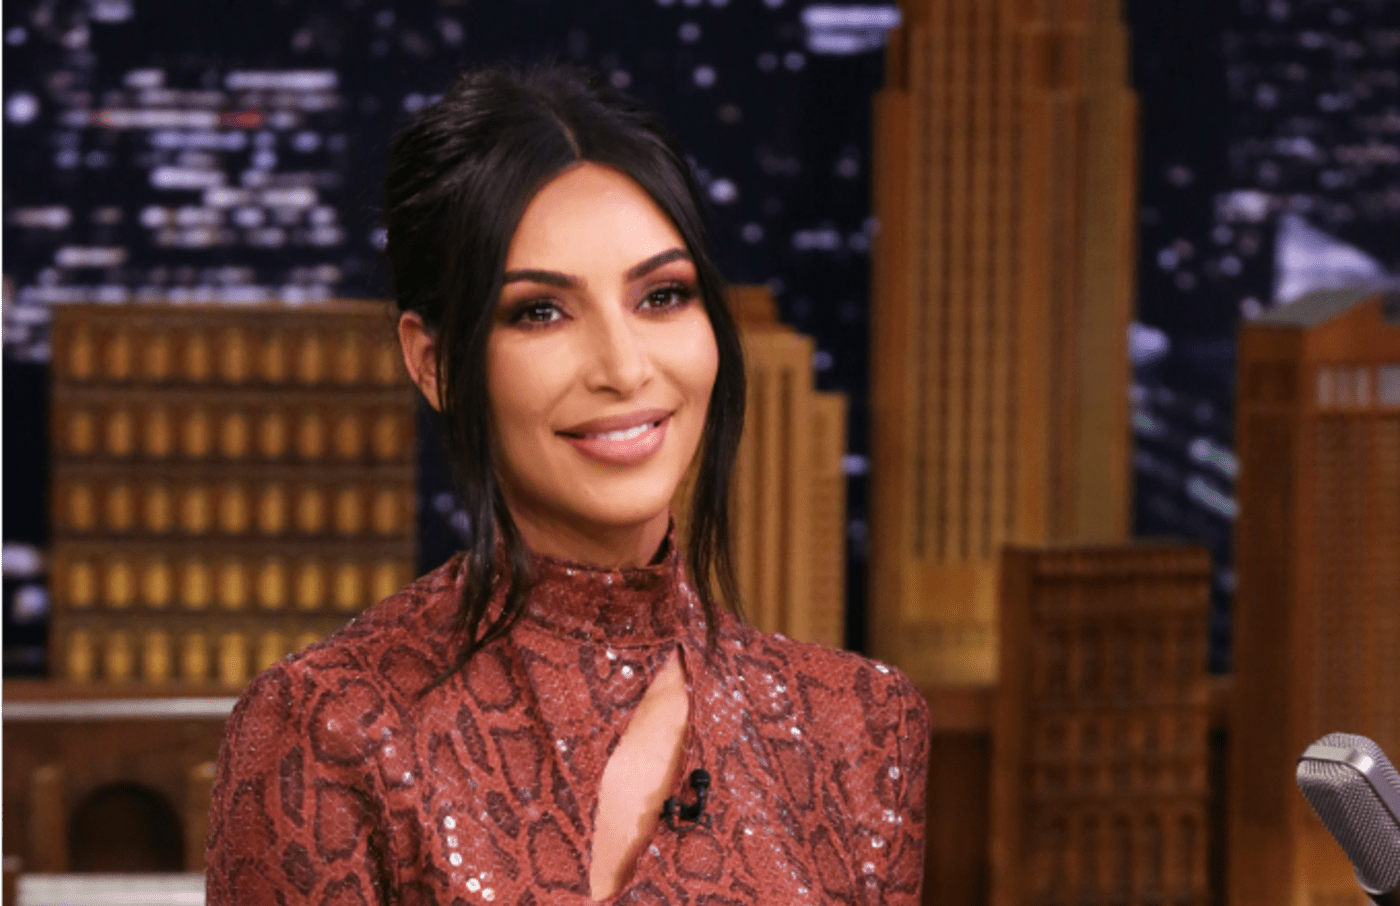 Entrepreneur Kim Kardashian West during an interview